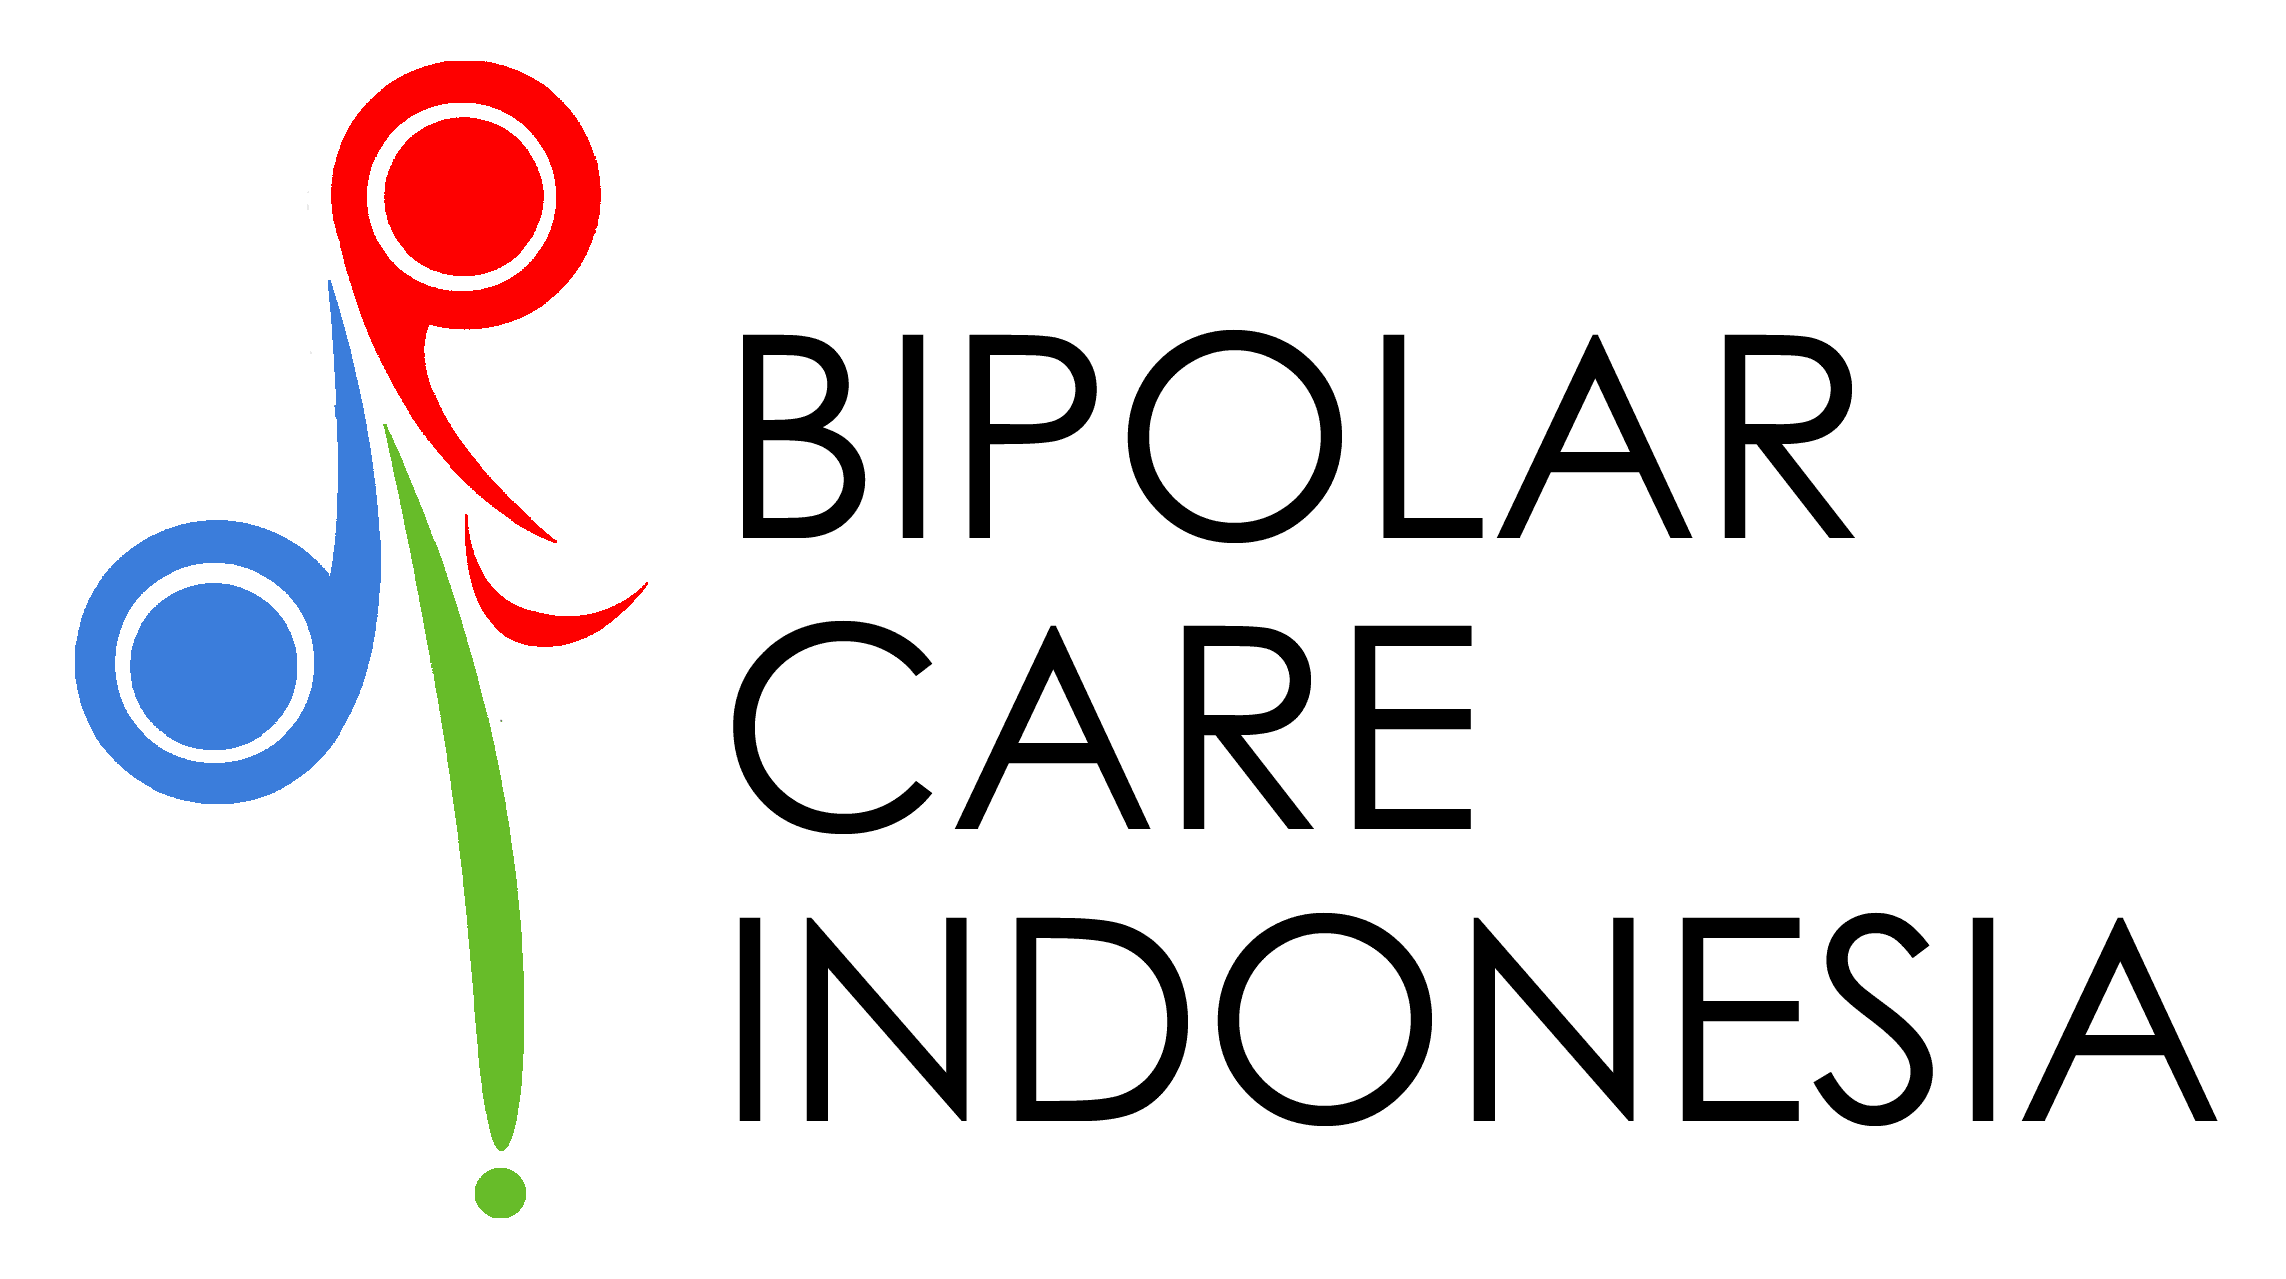 Bipolar Care Indonesia